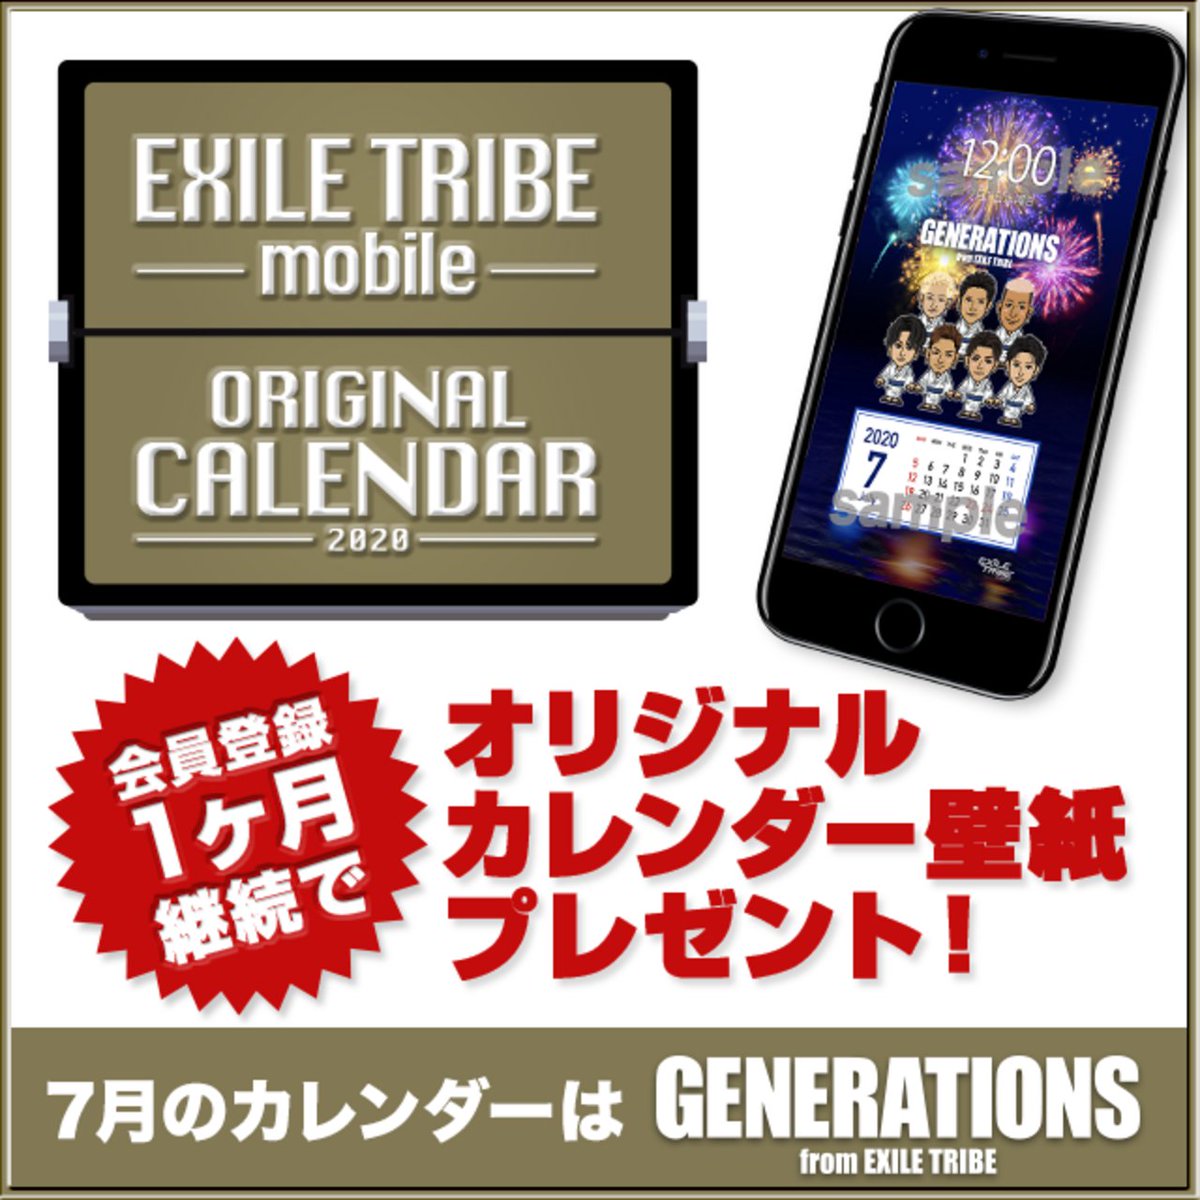 Exile Tribe Mobile 更新通知 News 7月のカレンダーはgenerations 7 1 水 12 00より7月のexile Tribe Mobileオリジナルカレンダー壁紙配信スタート 6 26 T Co Owchziznly T Co Daj0imbhbx